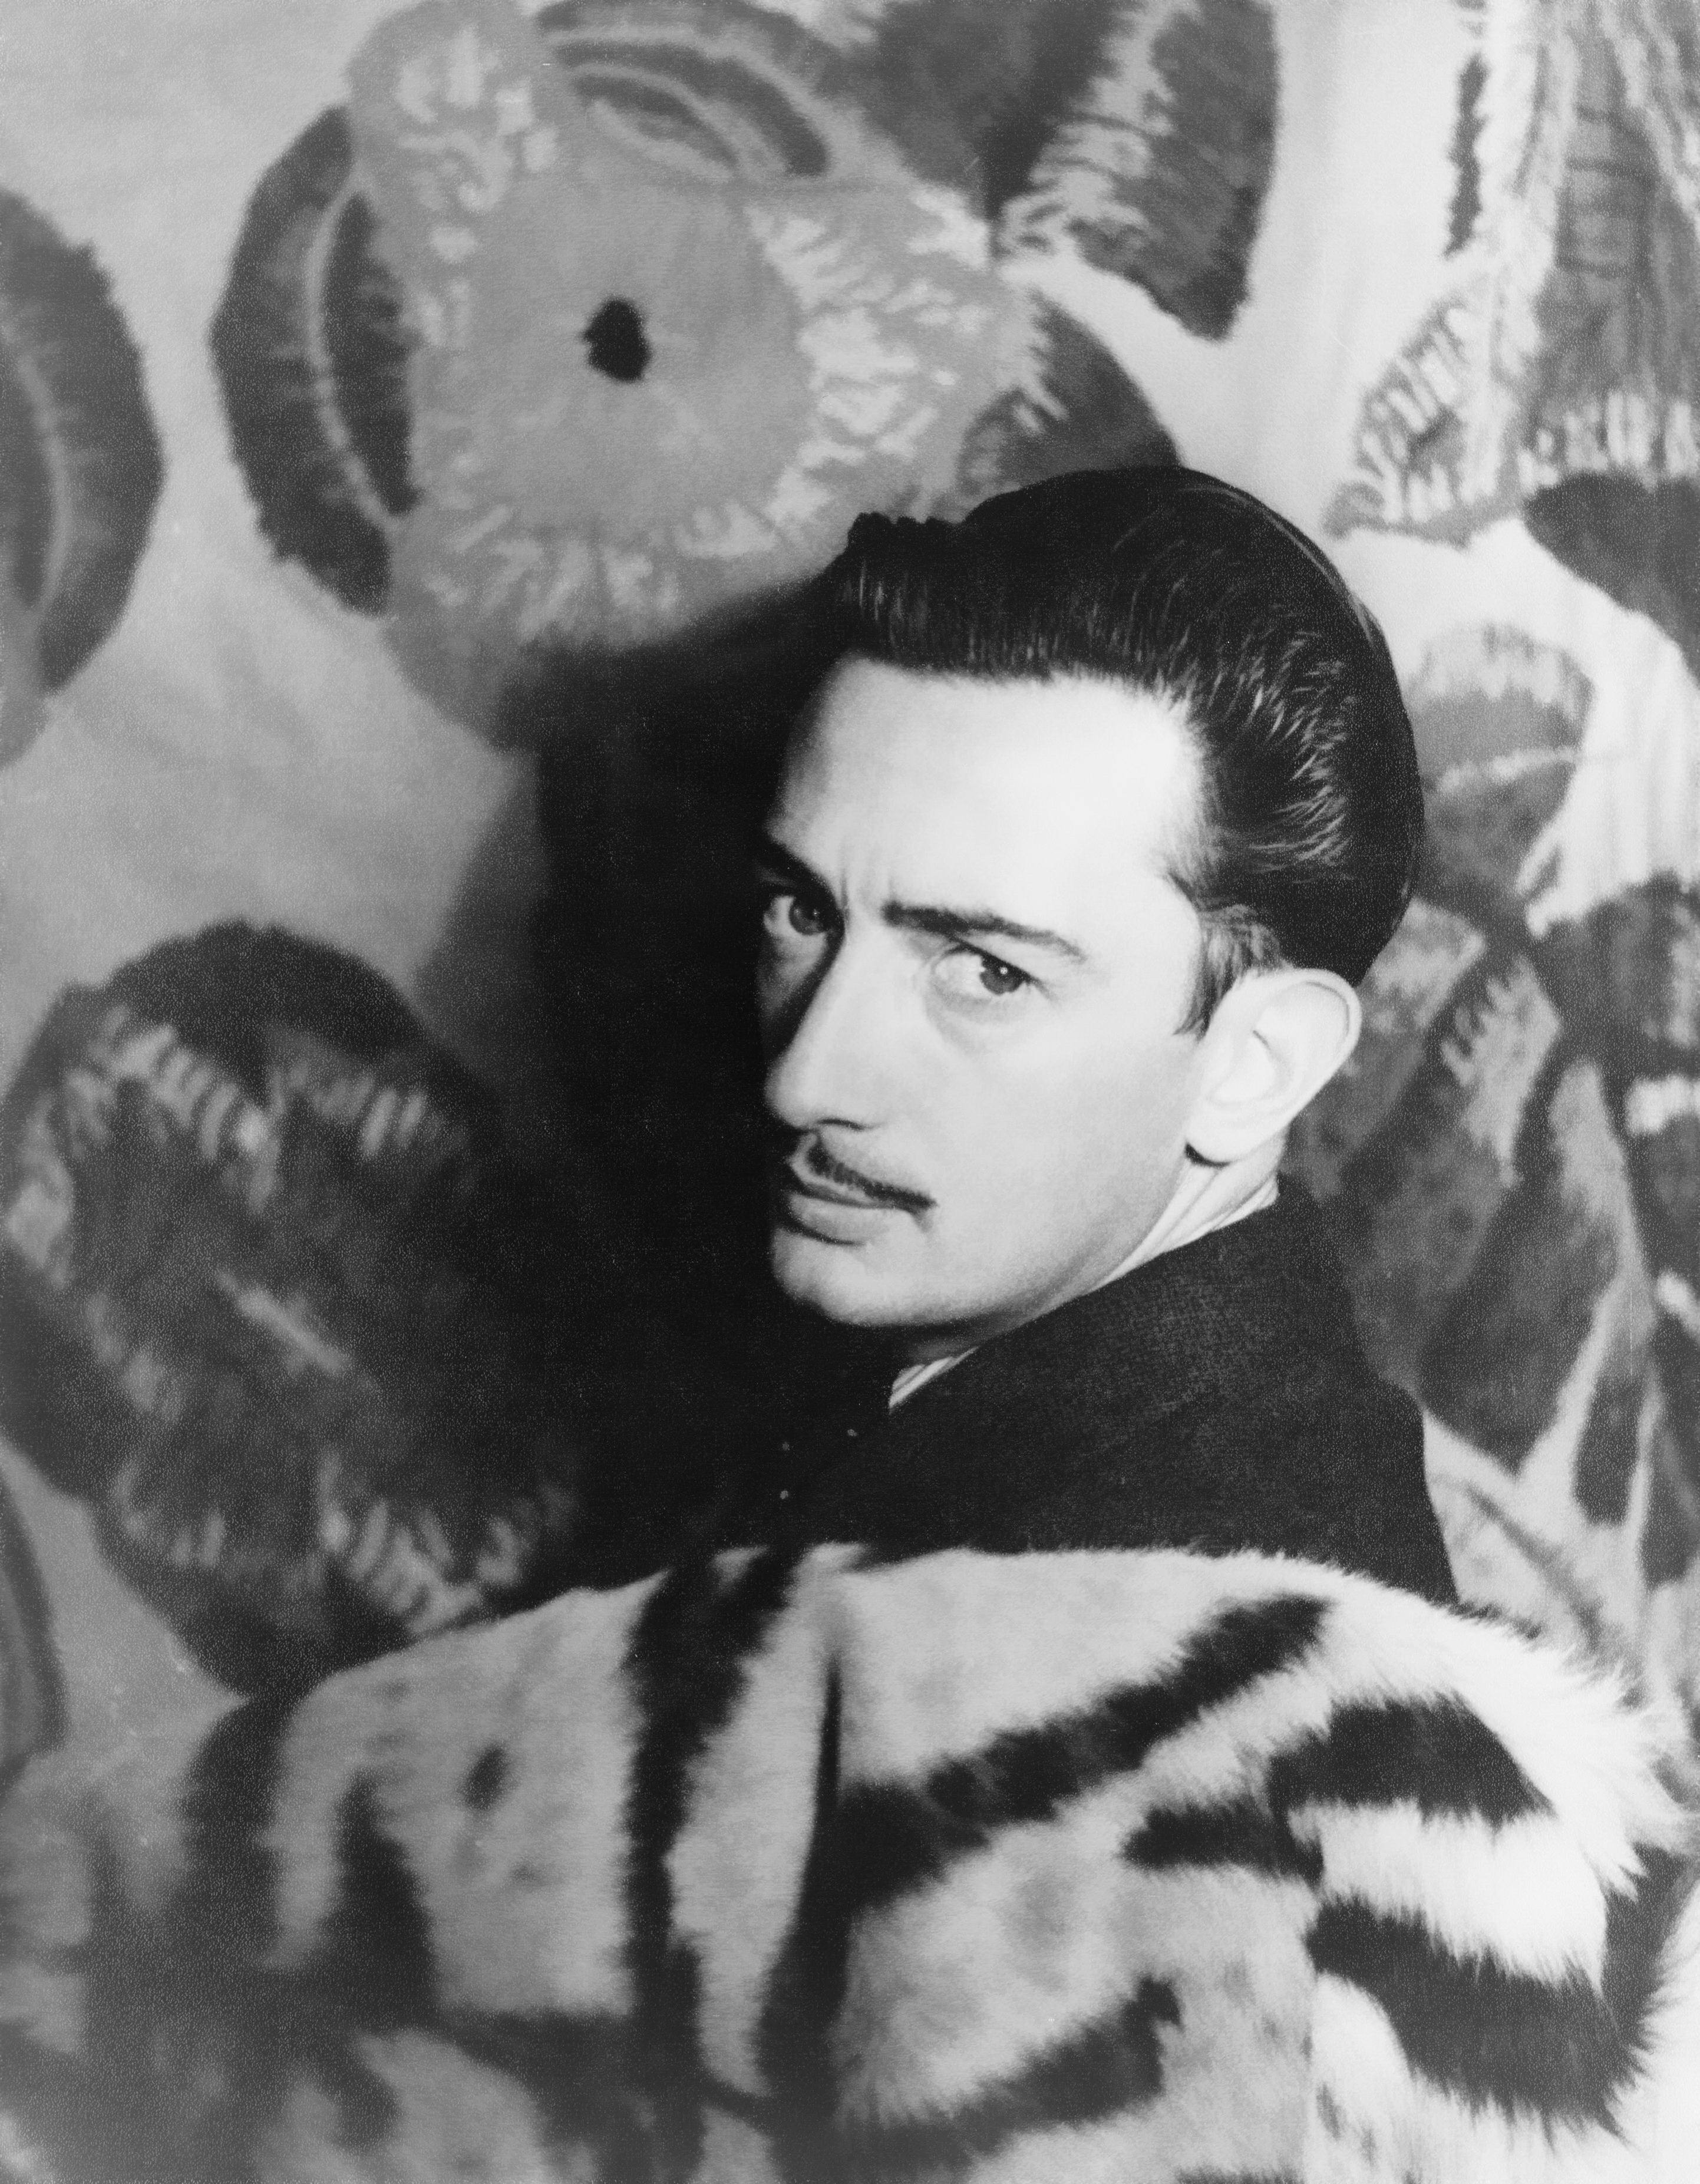 Salvador Dalí - May 11, 1904 - January 23, 1989